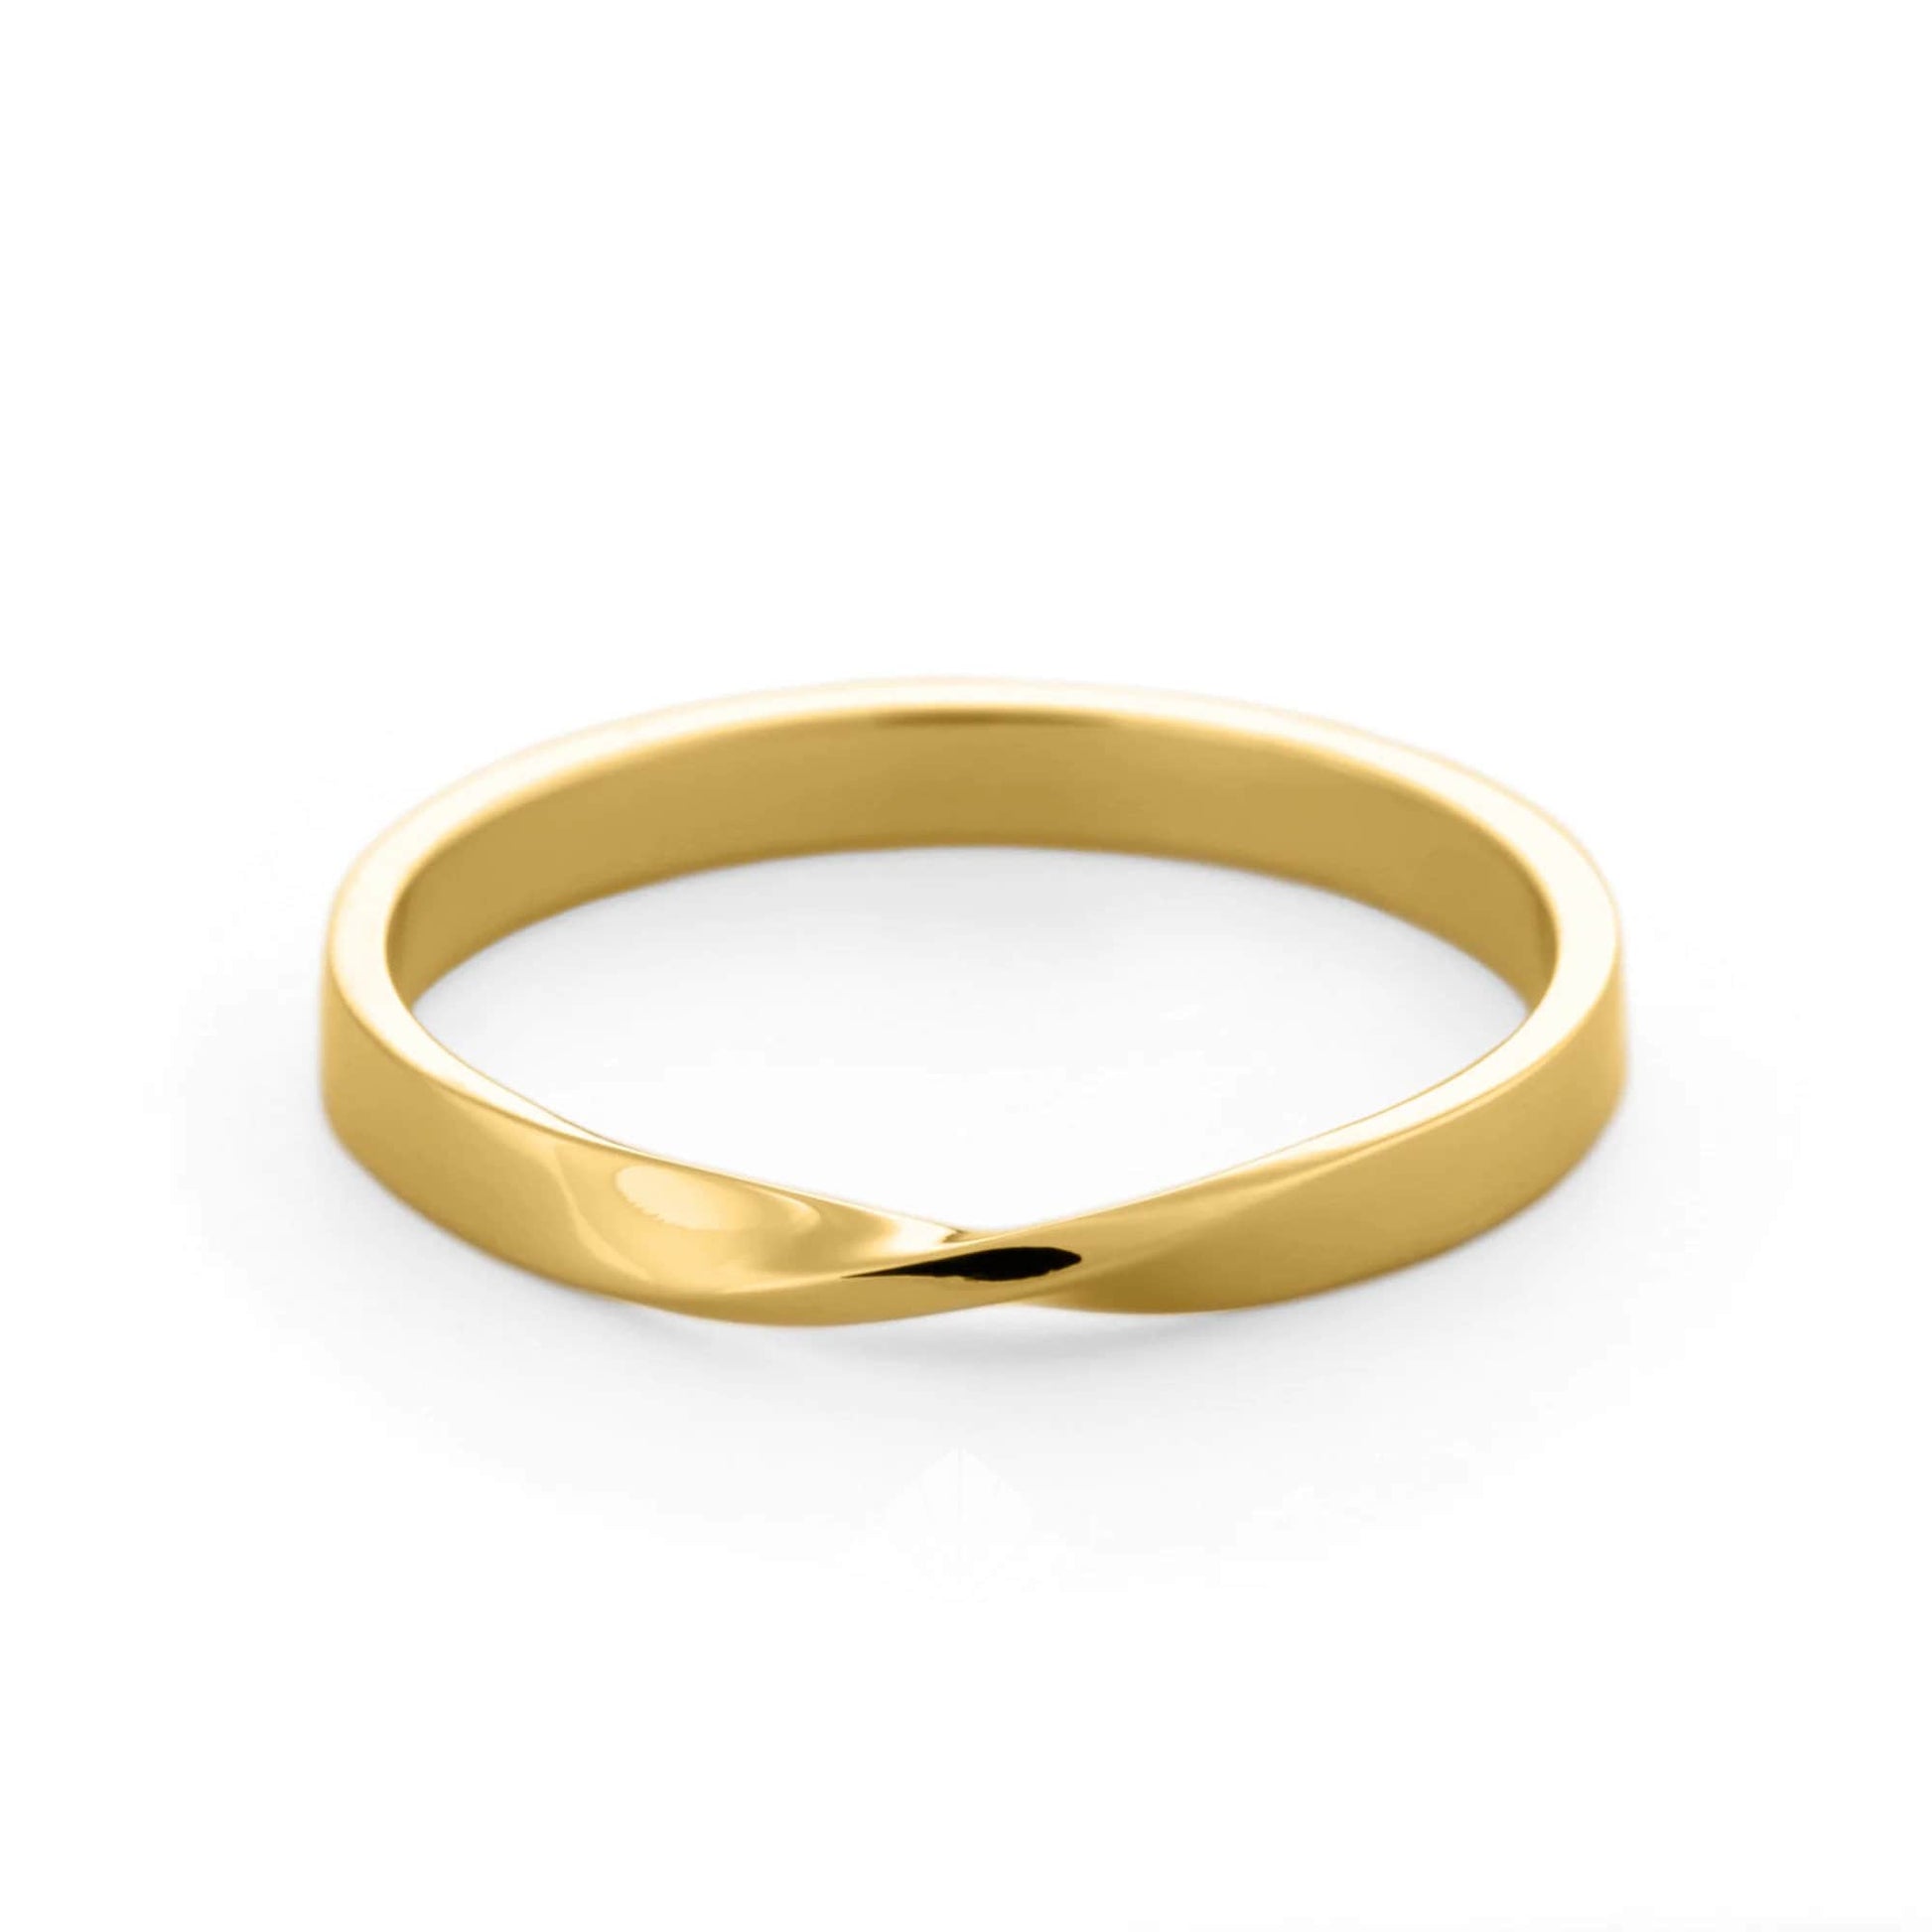 14K Gold Mobius Ring, Mobius Wedding Band, Twist Band Ring, Simple Marriage Band, Elegant Stacking Ring, Infinity Band Ring, Couples Ring